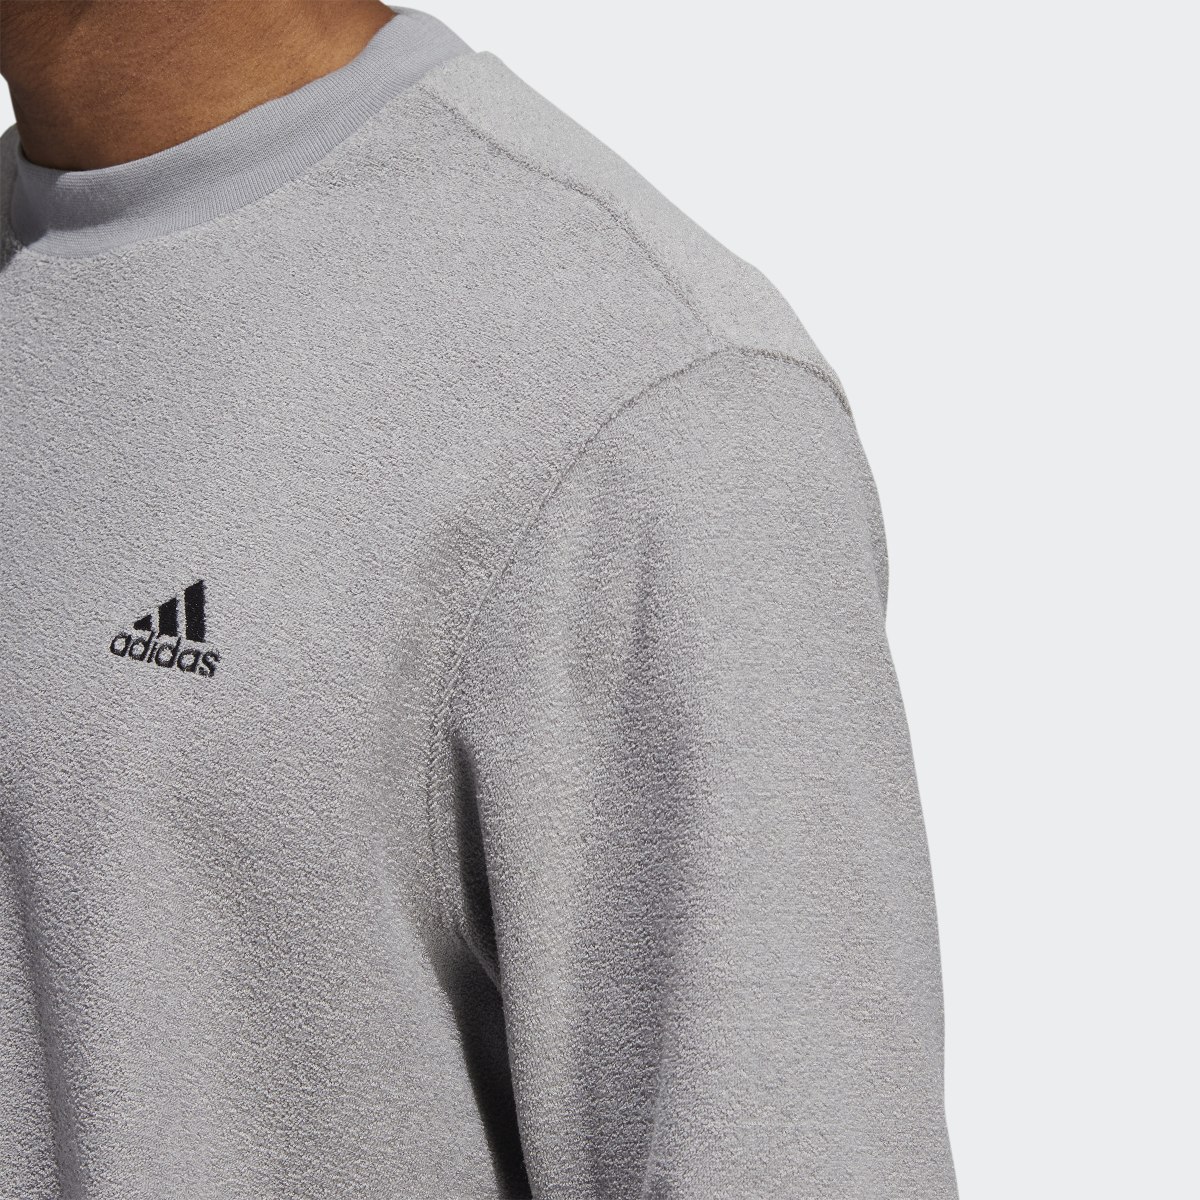 Adidas Core Crew Sweatshirt. 6